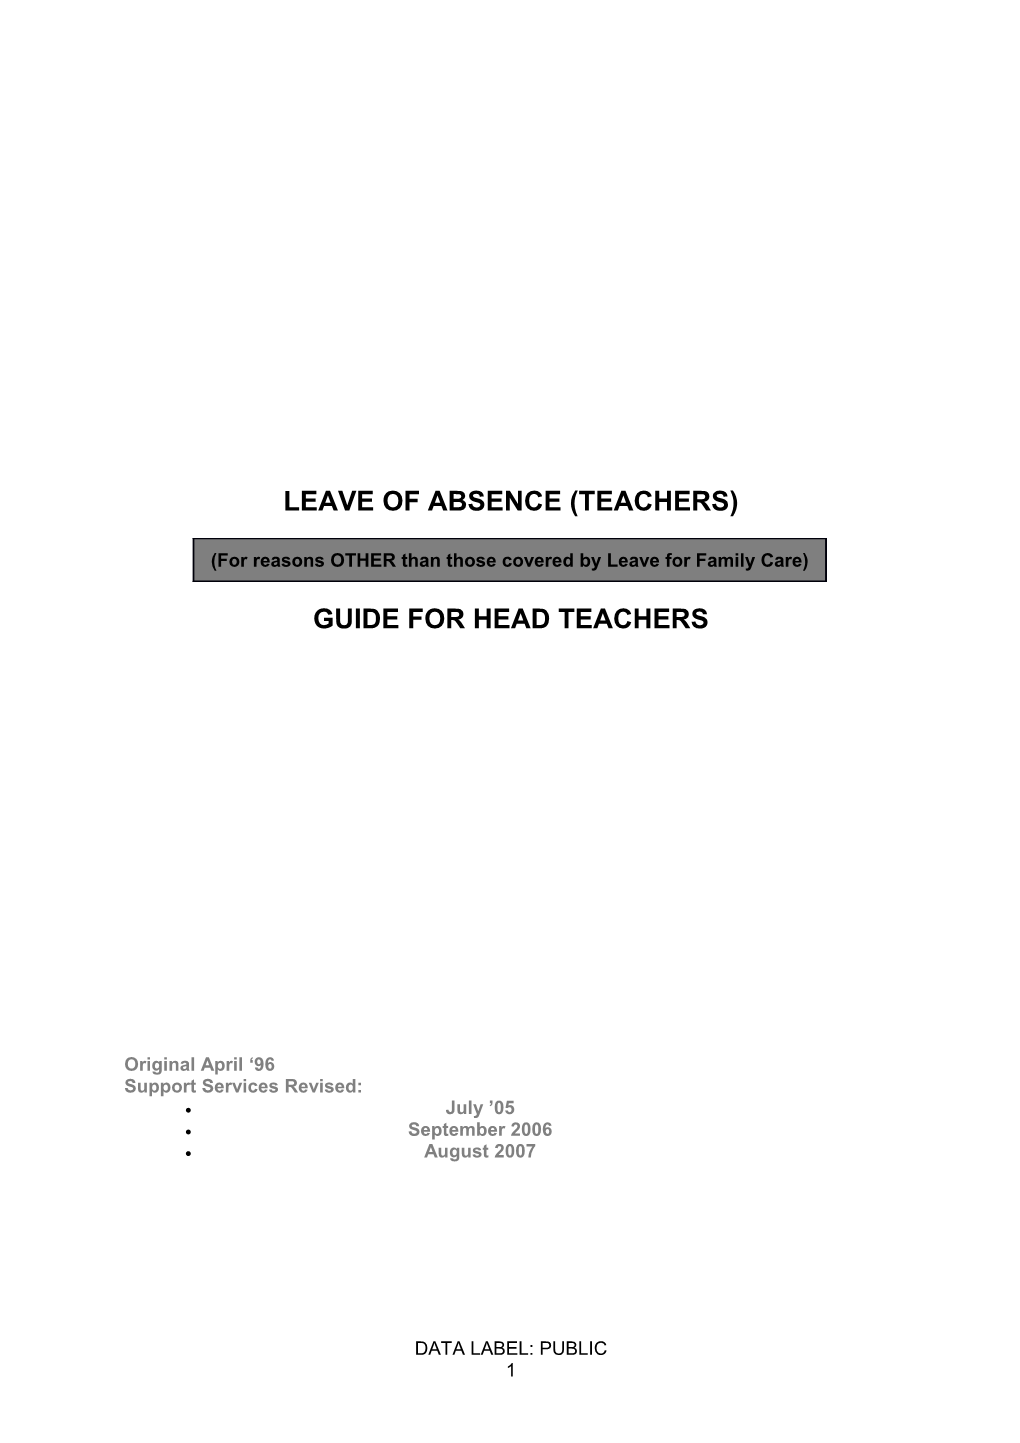 Guide for Head Teachers